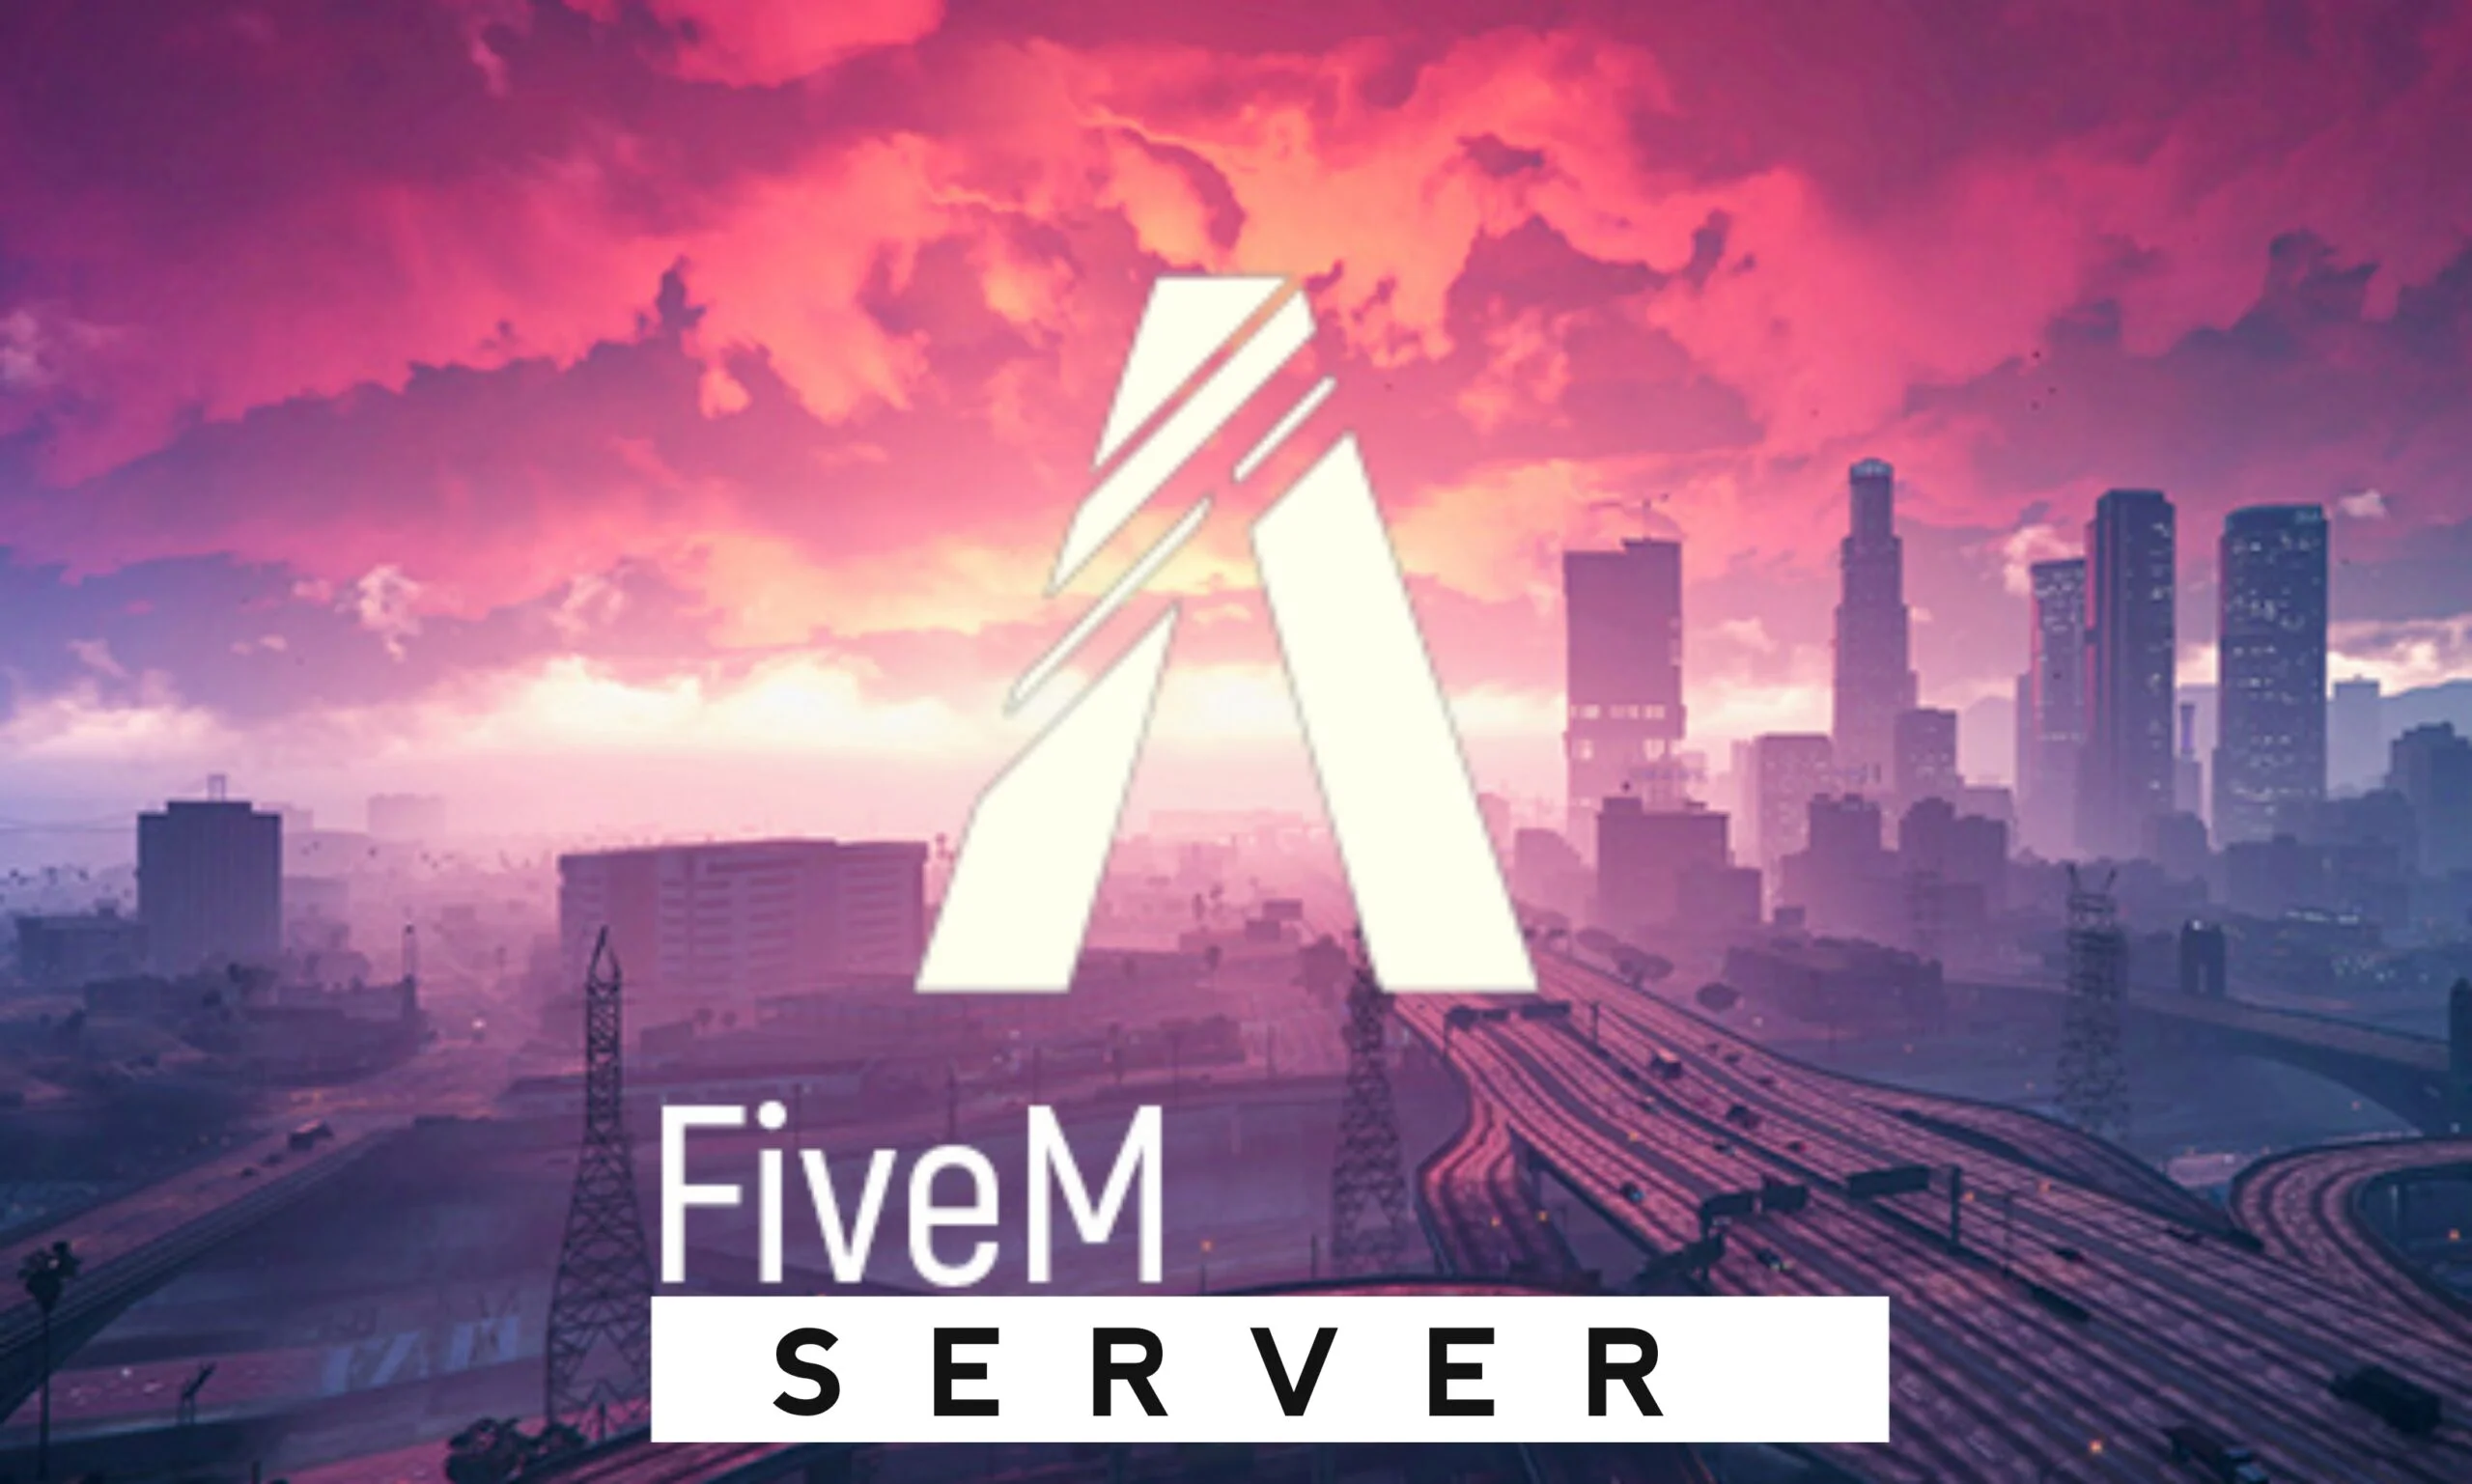 Organic fivem discord server promotion, fivem advertisement